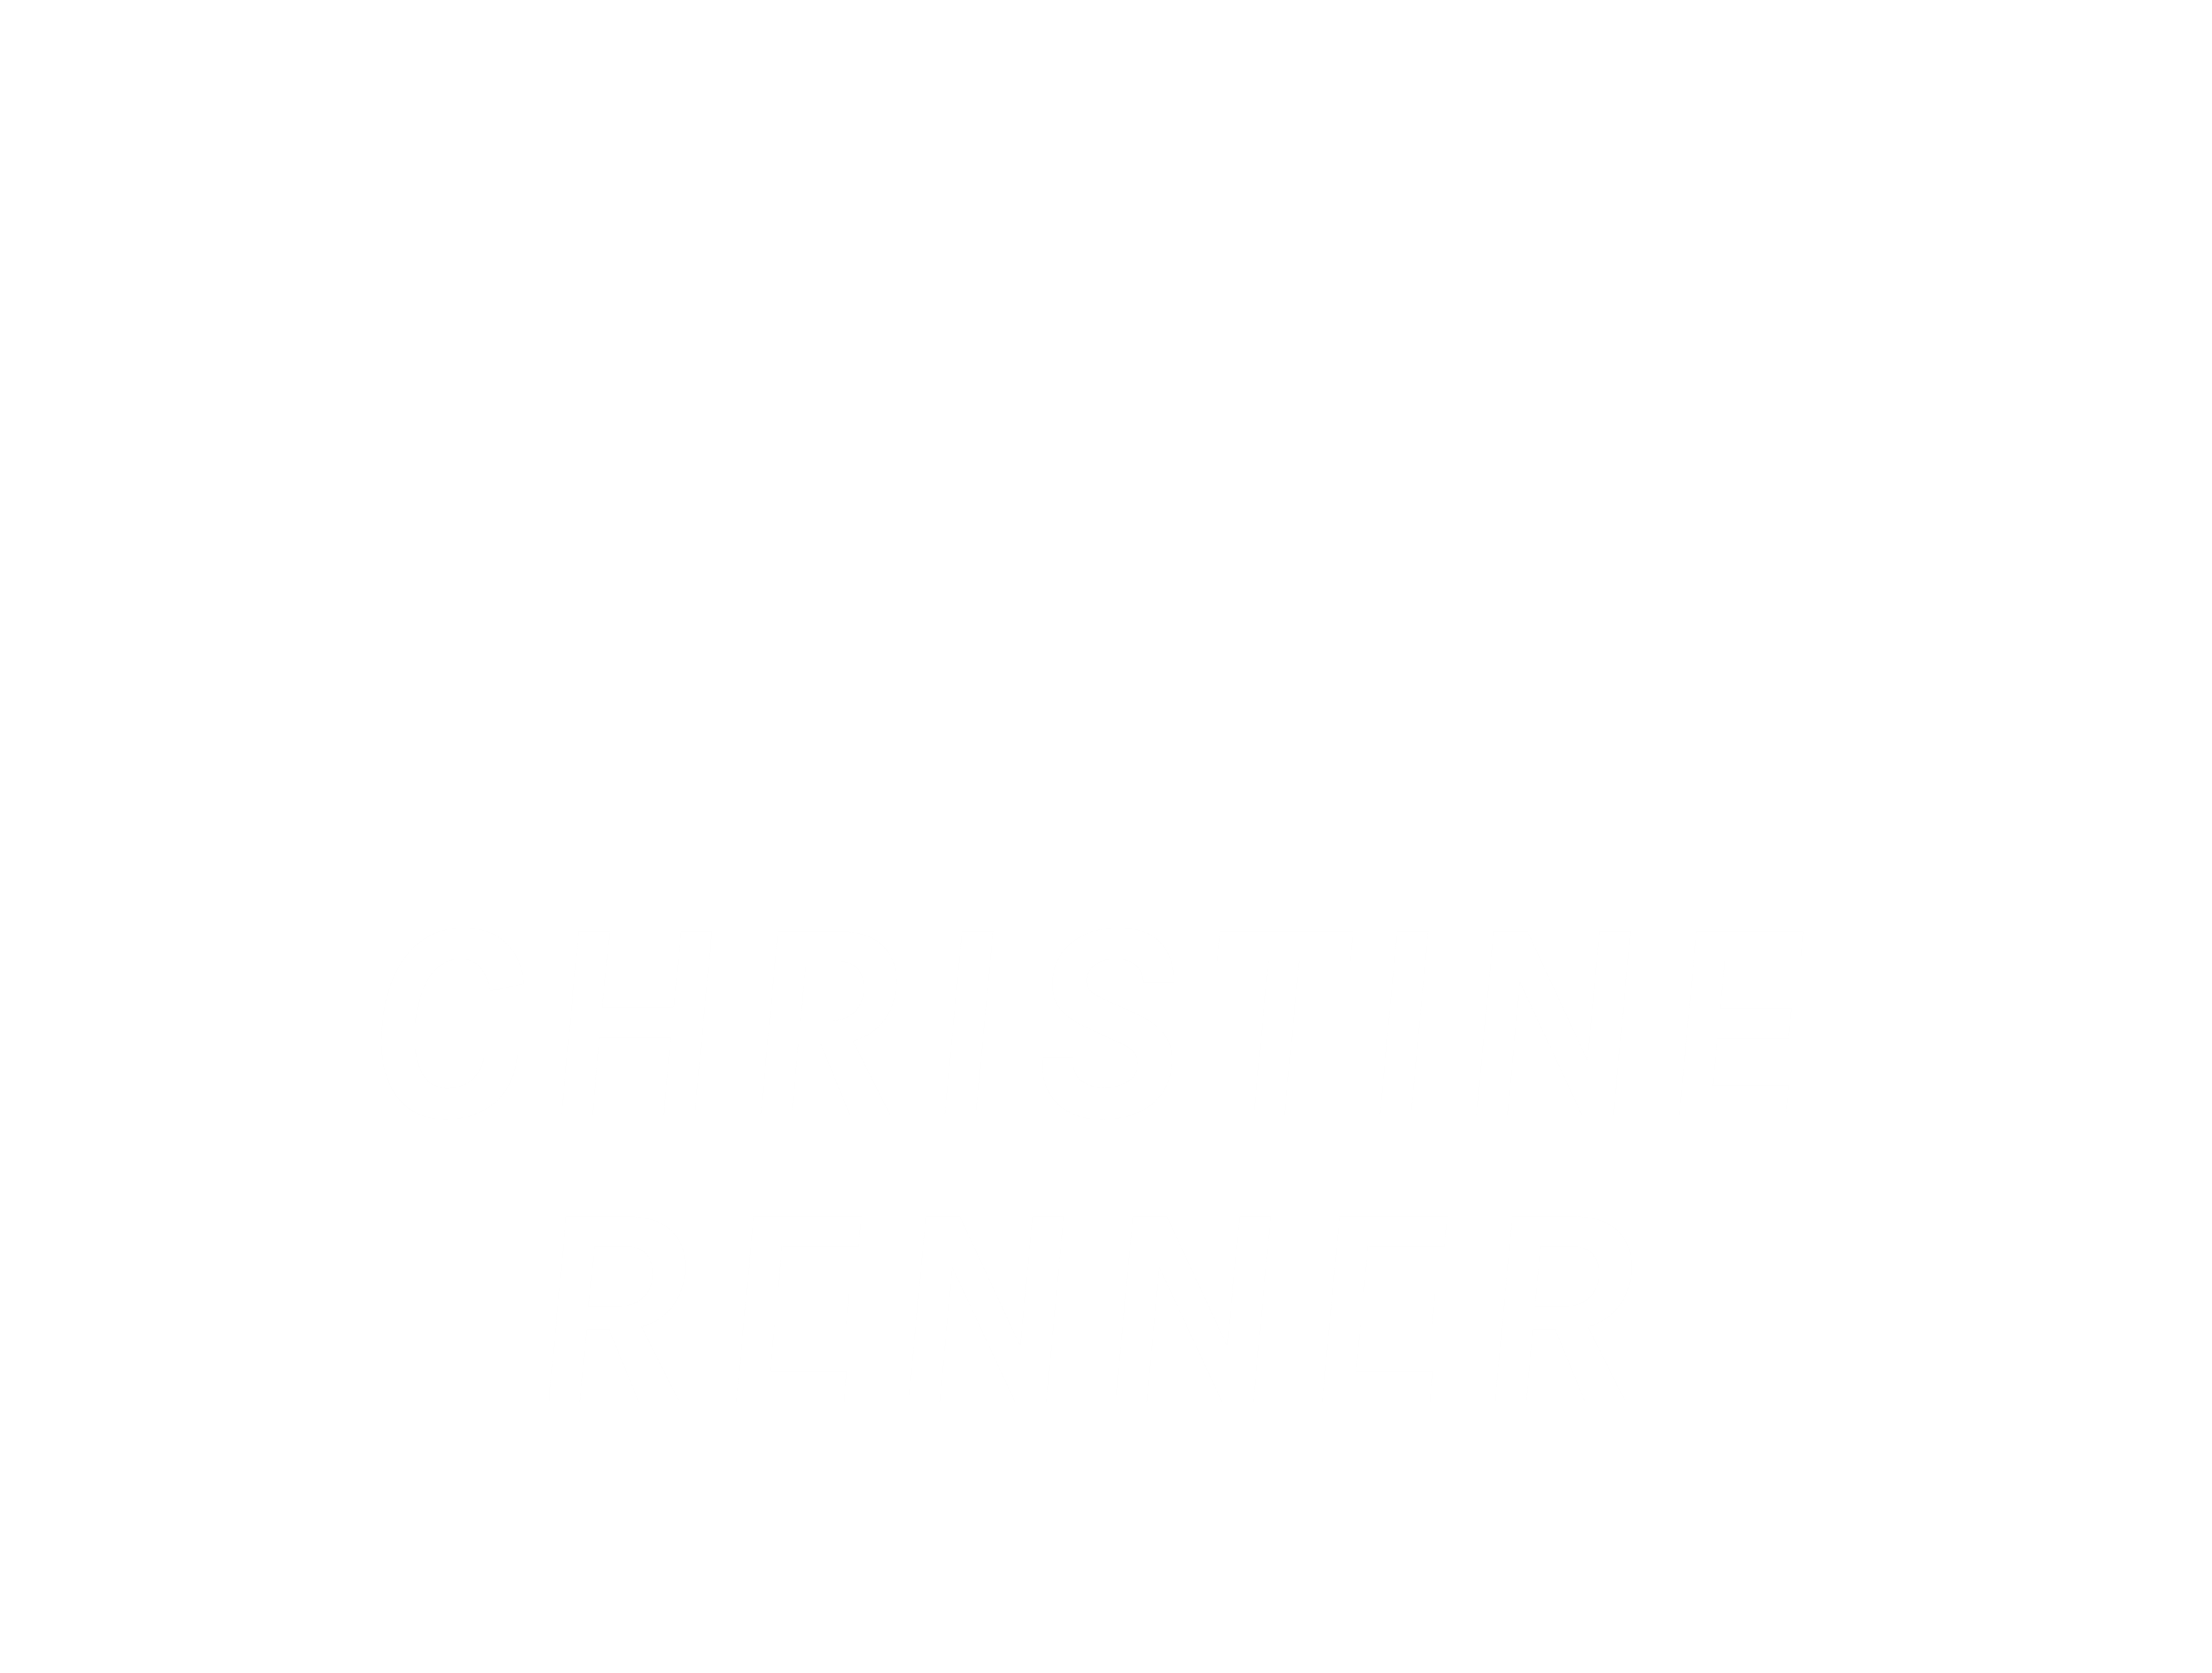 CHRISTINE RENNER